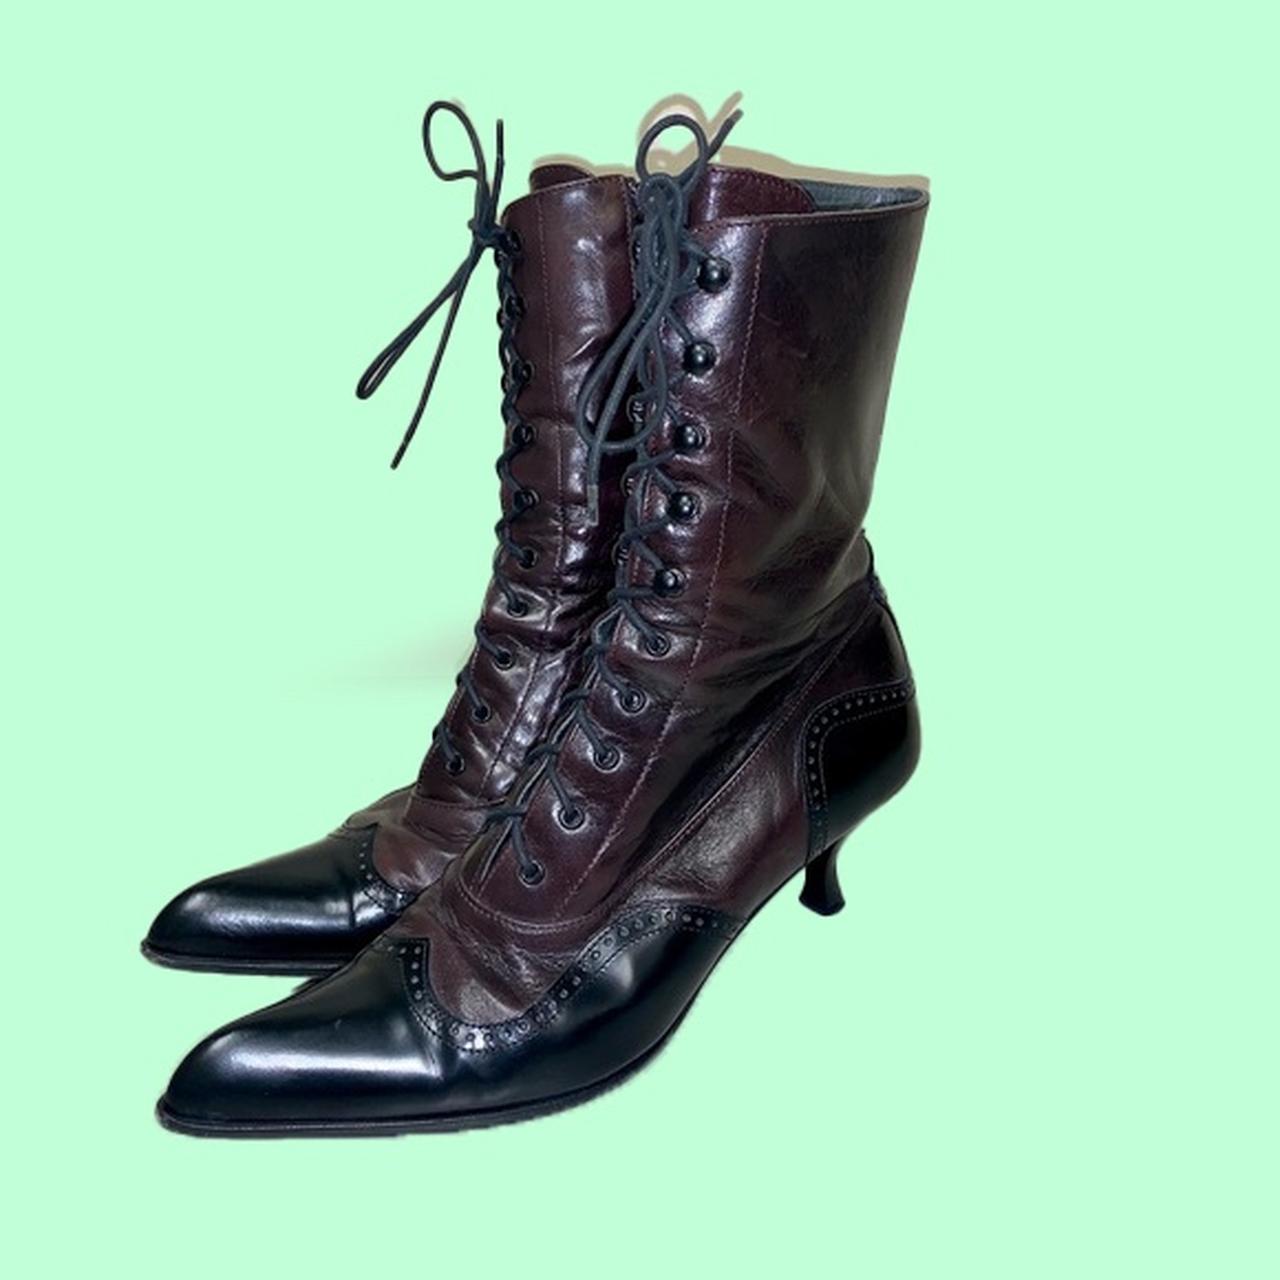 Vintage Miu Miu Lace Up Wing Tip Victorian Boots 2... - Depop